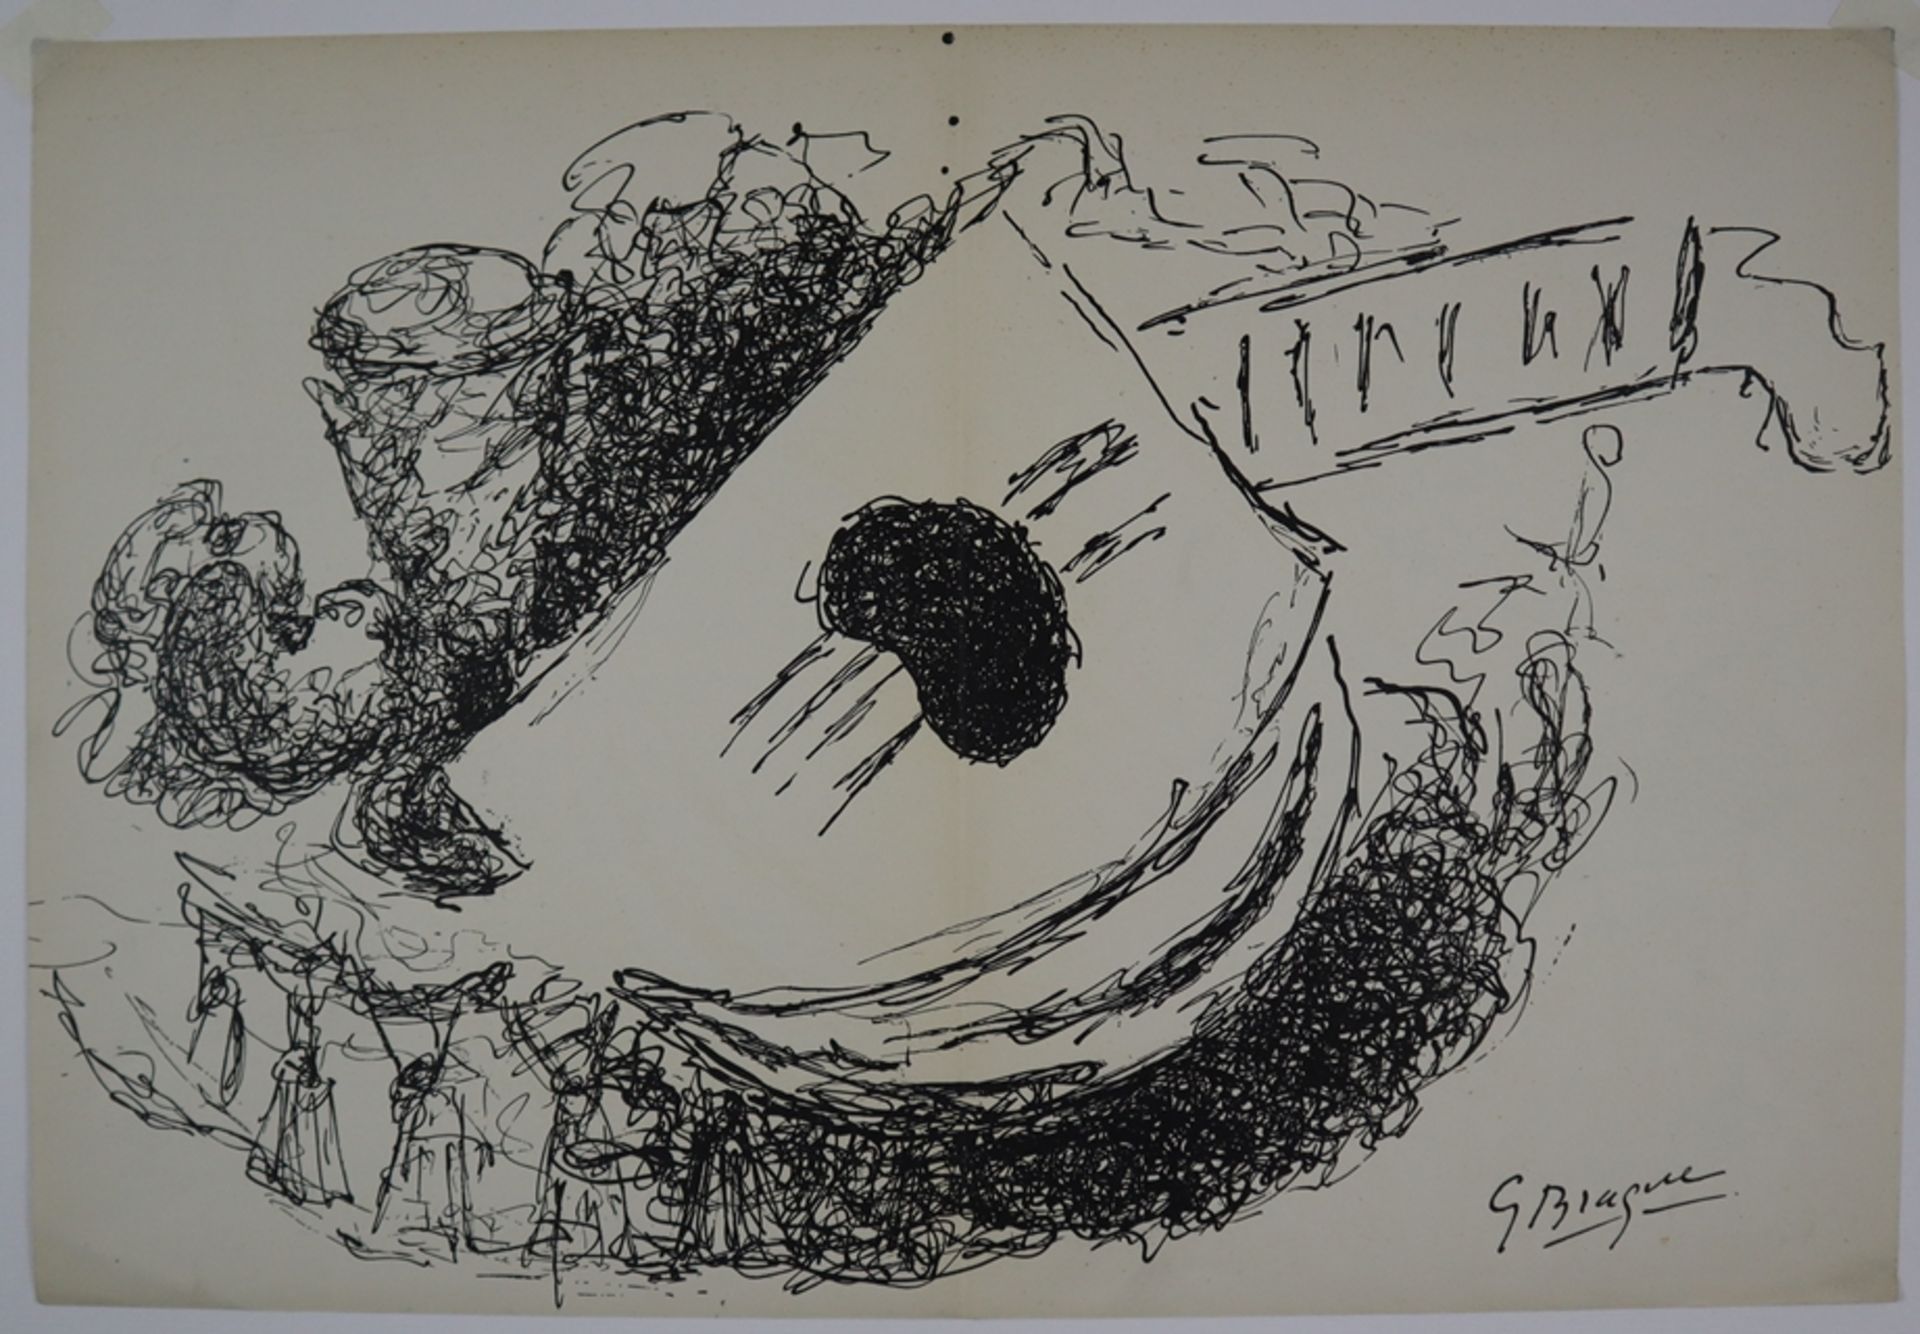 Braque, Georges (1882 Argenteuil - 1963 Paris) - "La guitare", Lithografie, im Stein signiert, Blat